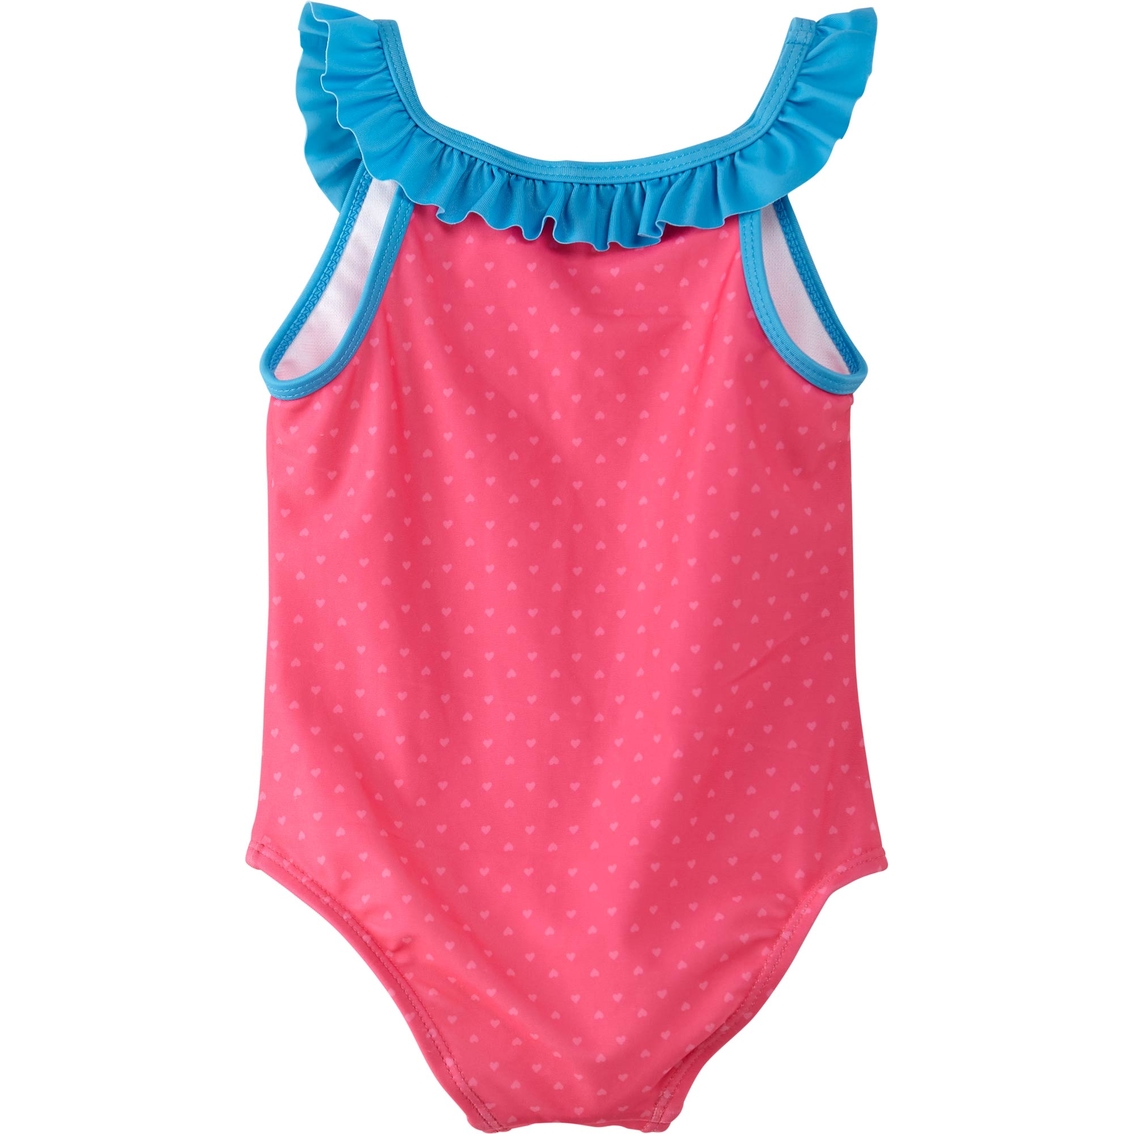 Peppa Pig Toddler Girls Swimsuit - Image 2 of 2